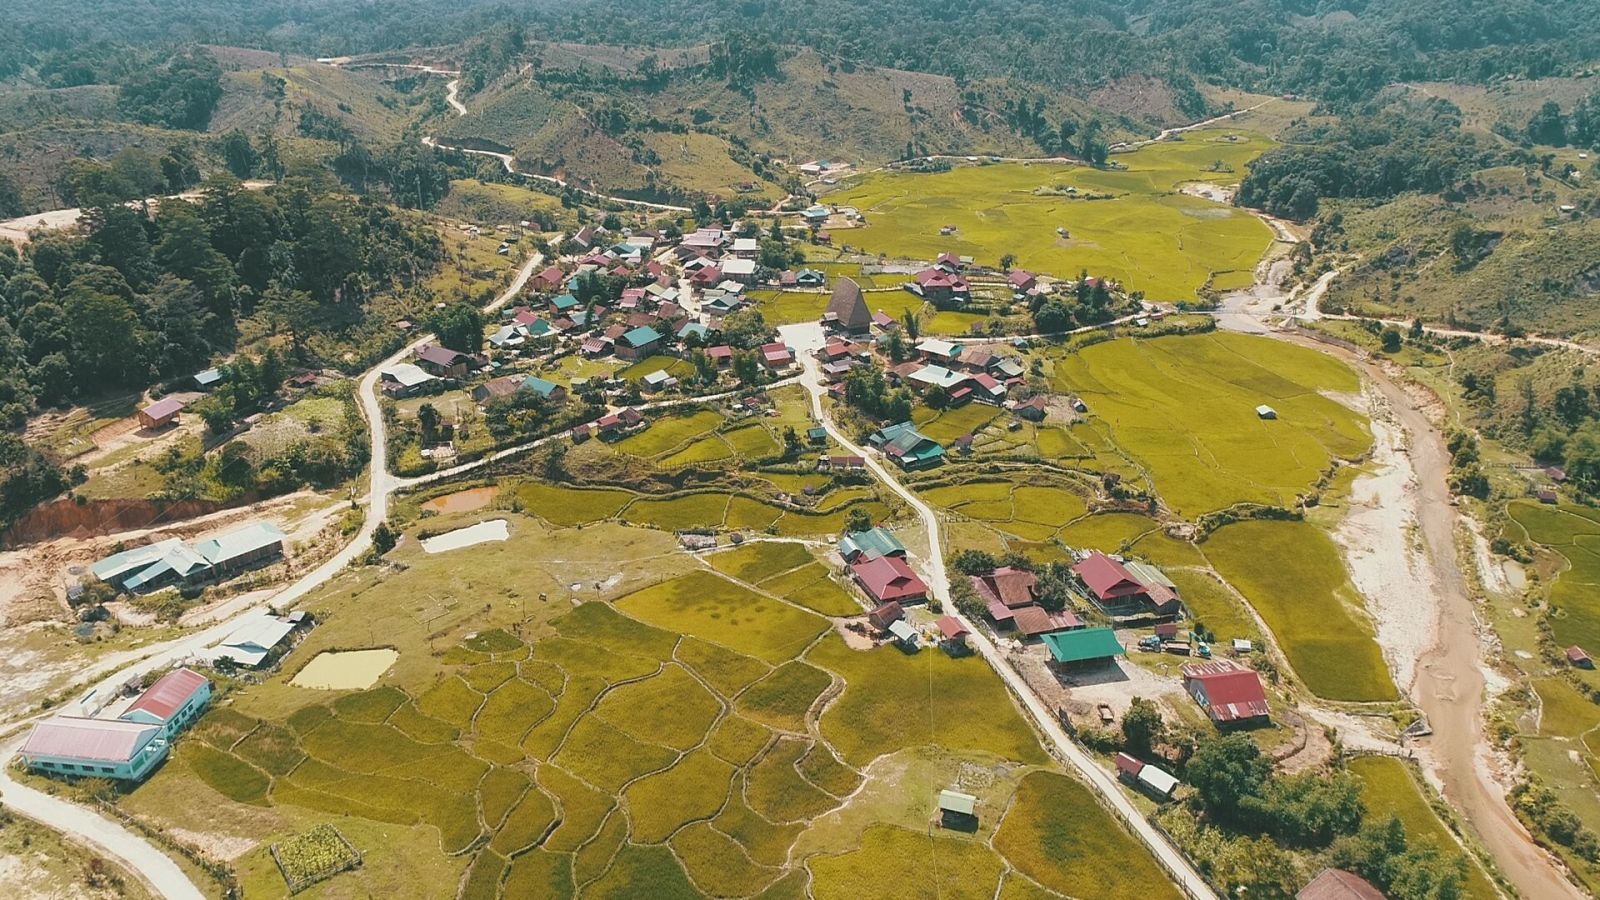 Vi Rơ Ngheo Village - The Eco-friendly Village in Kon Plông Mountains